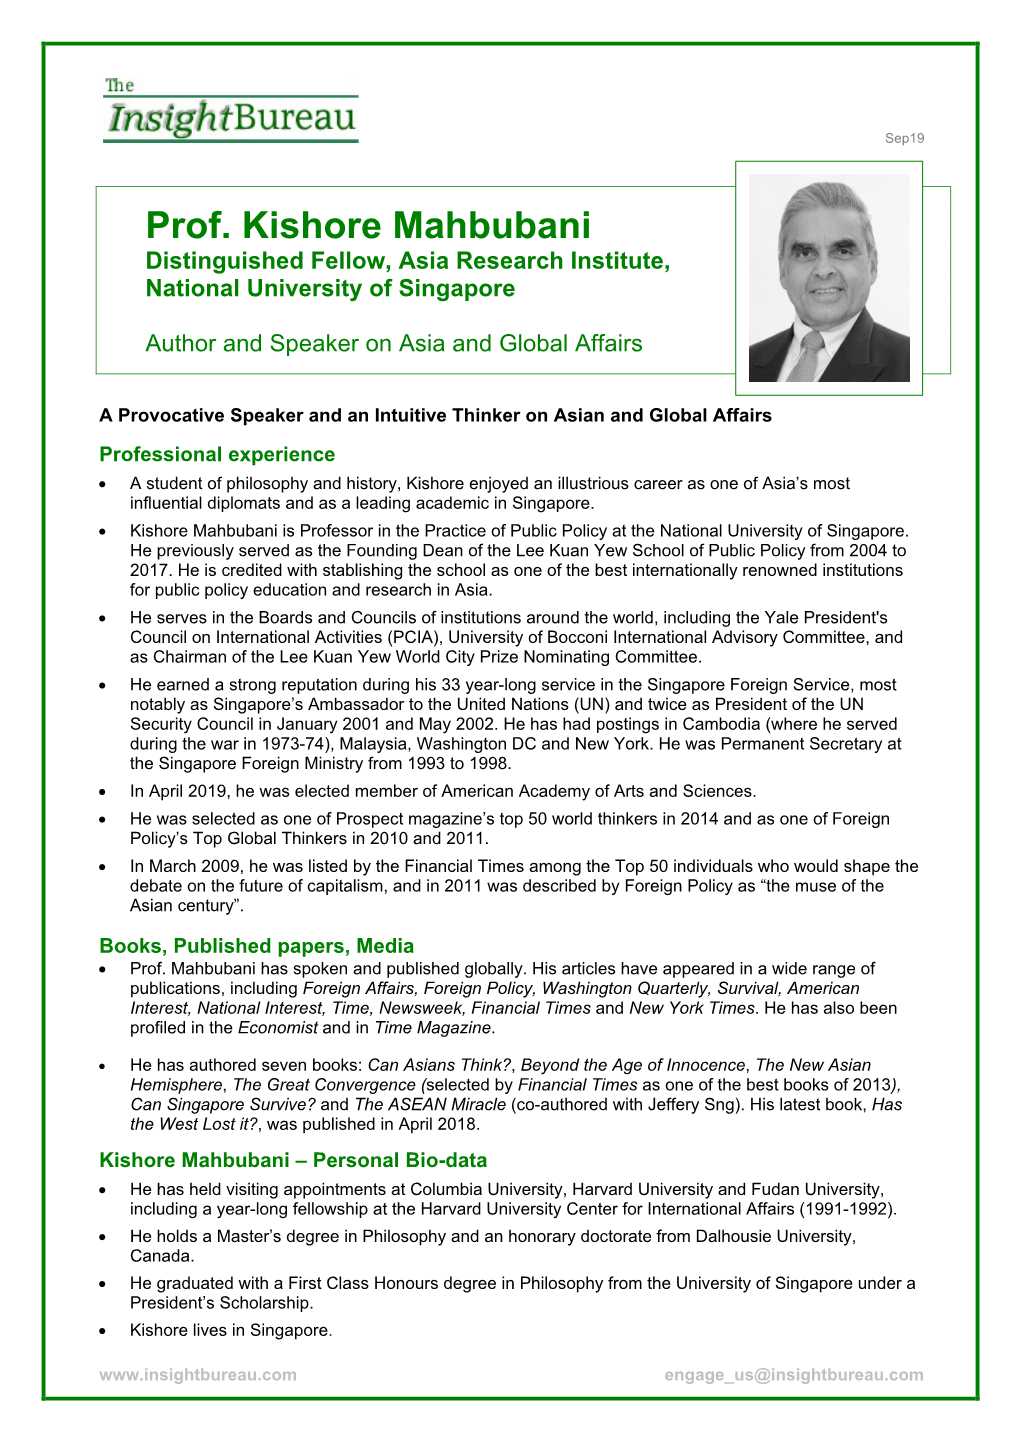 Prof. Kishore Mahbubani Distinguished Fellow, Asia Research Institute, National University of Singapore